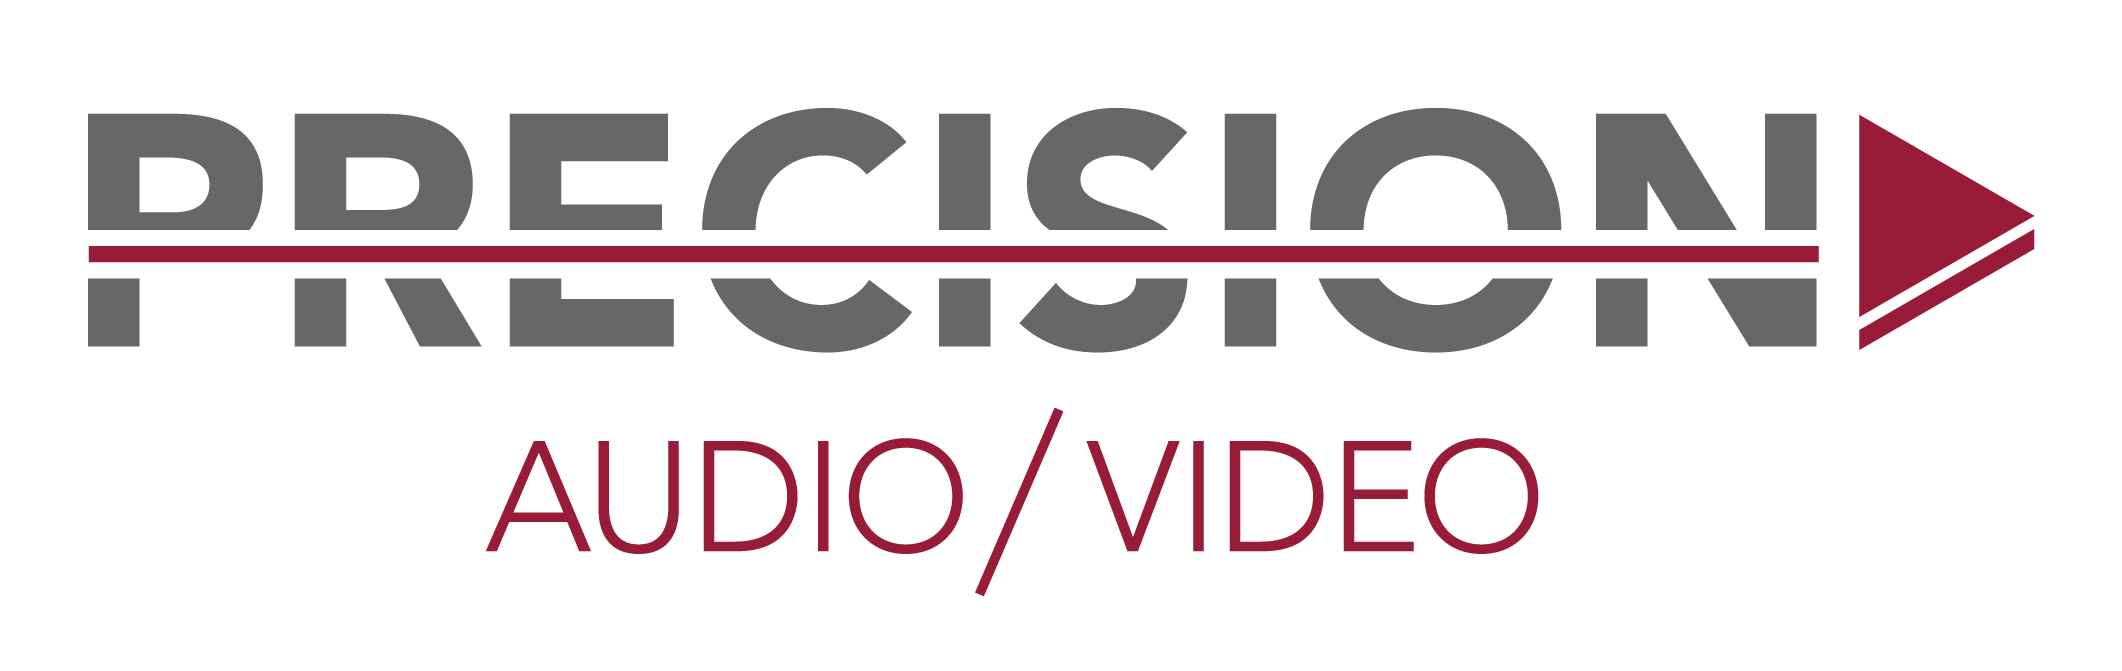 Precision Audio/Video Logo